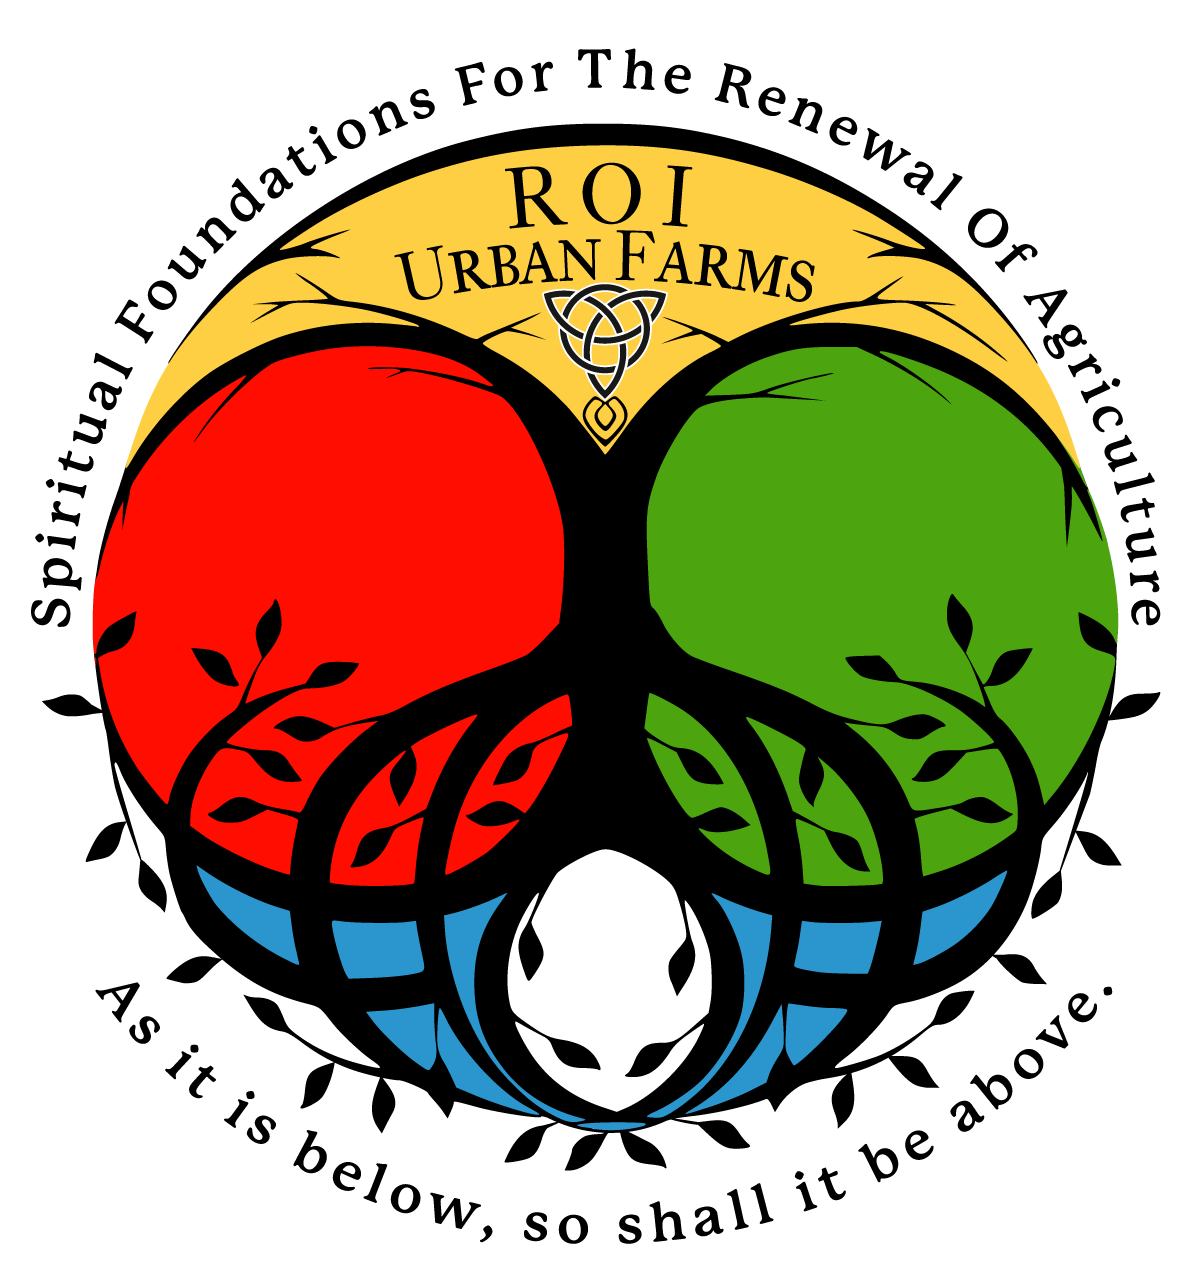 ROI URBAN FARMS